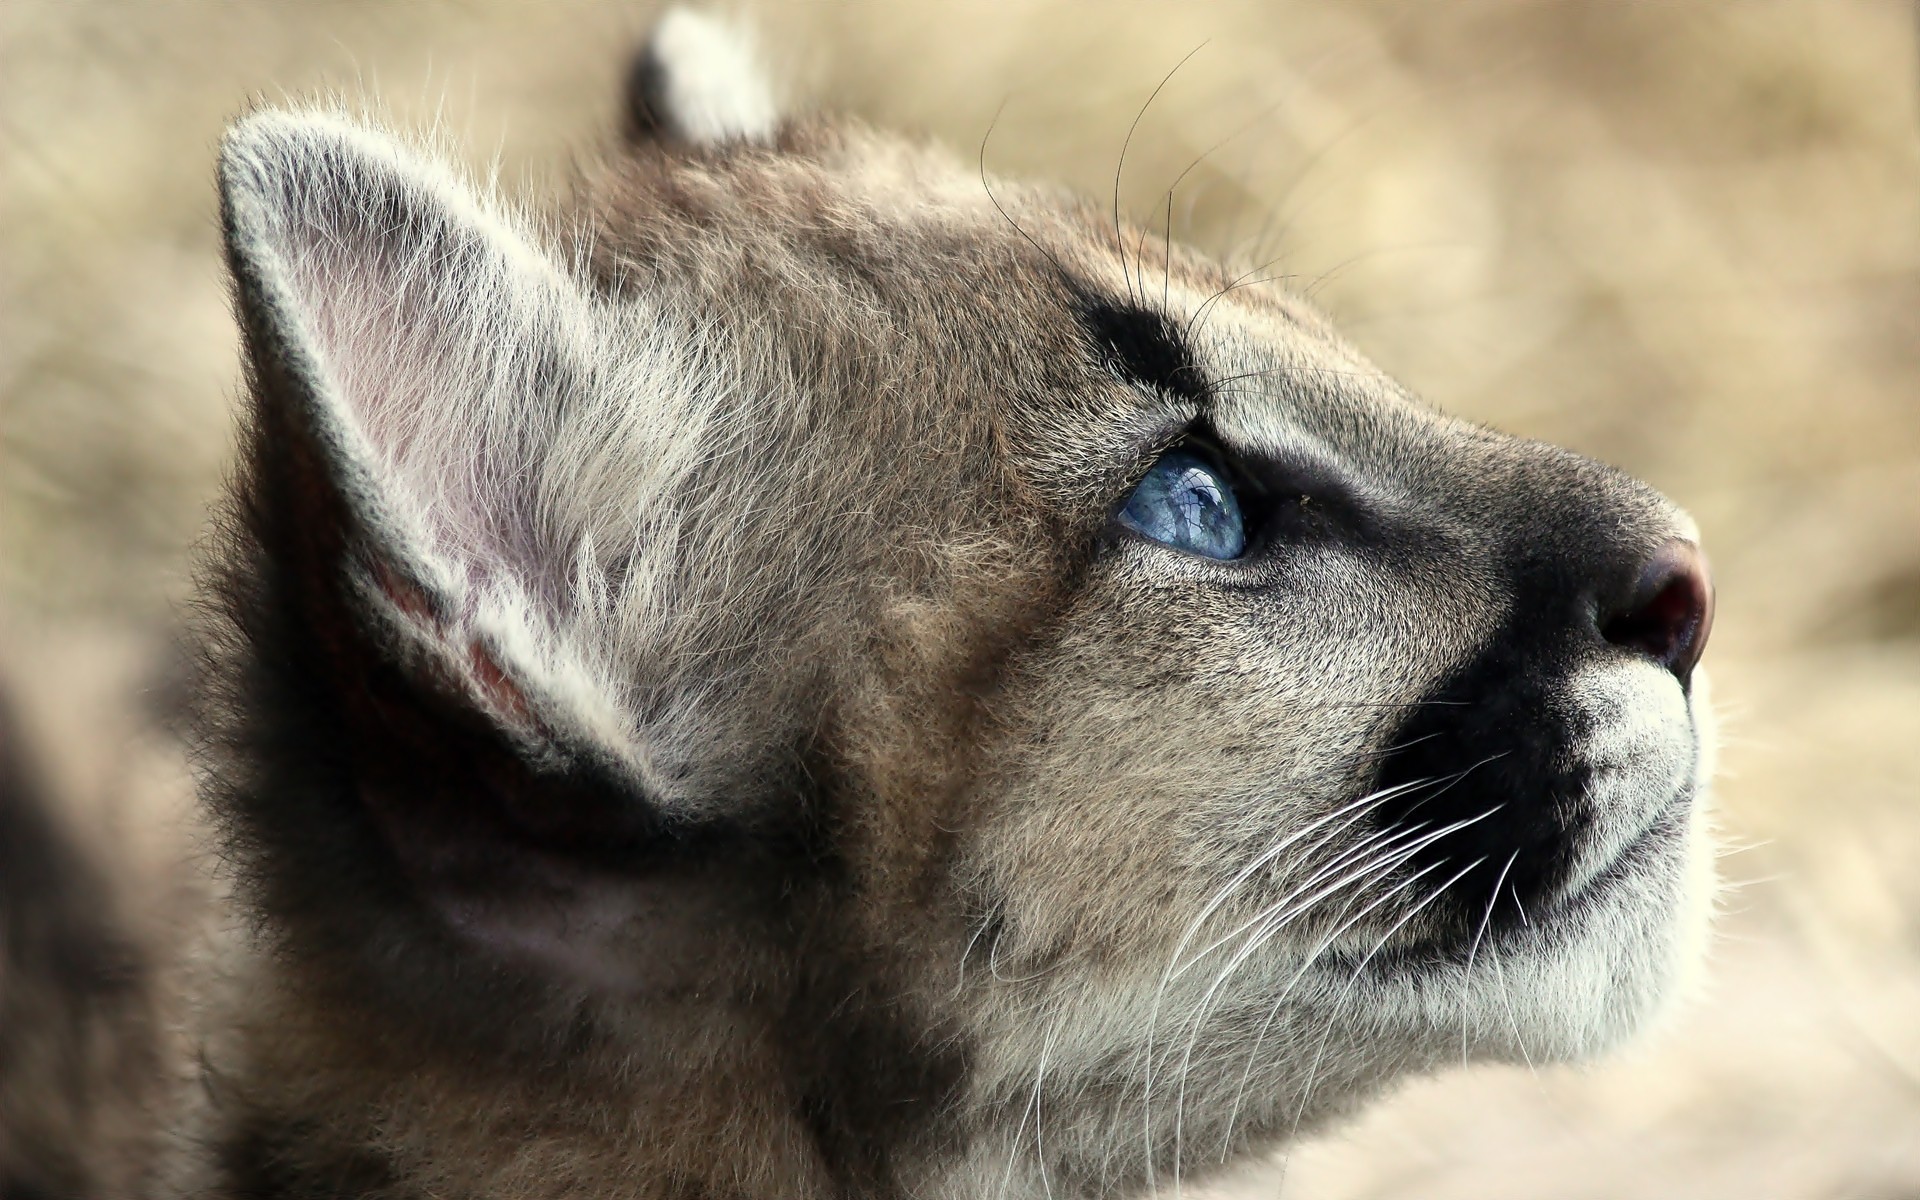 blue eyes, animals - desktop wallpaper